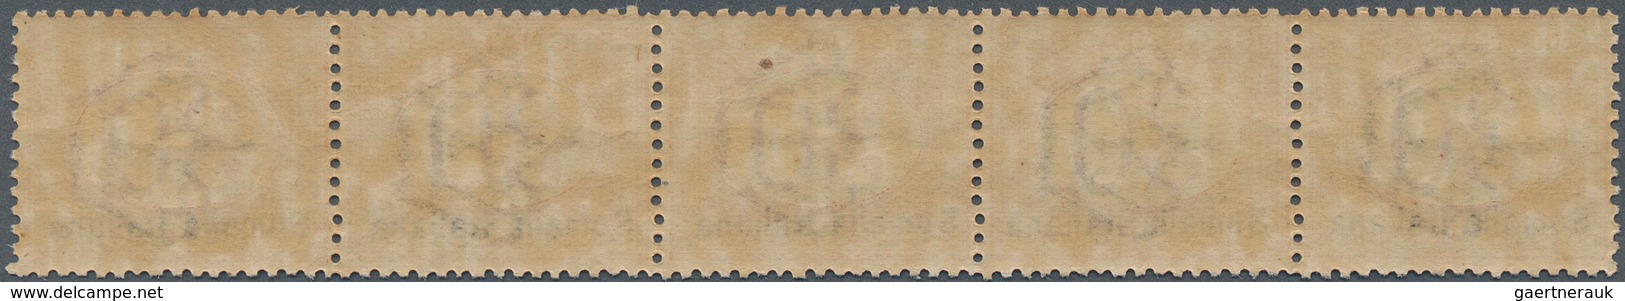 Italienisch-Somaliland - Portomarken: 1920, Italy Postage Due 30c. Orange/carmine With Black Opt. 'S - Somalia